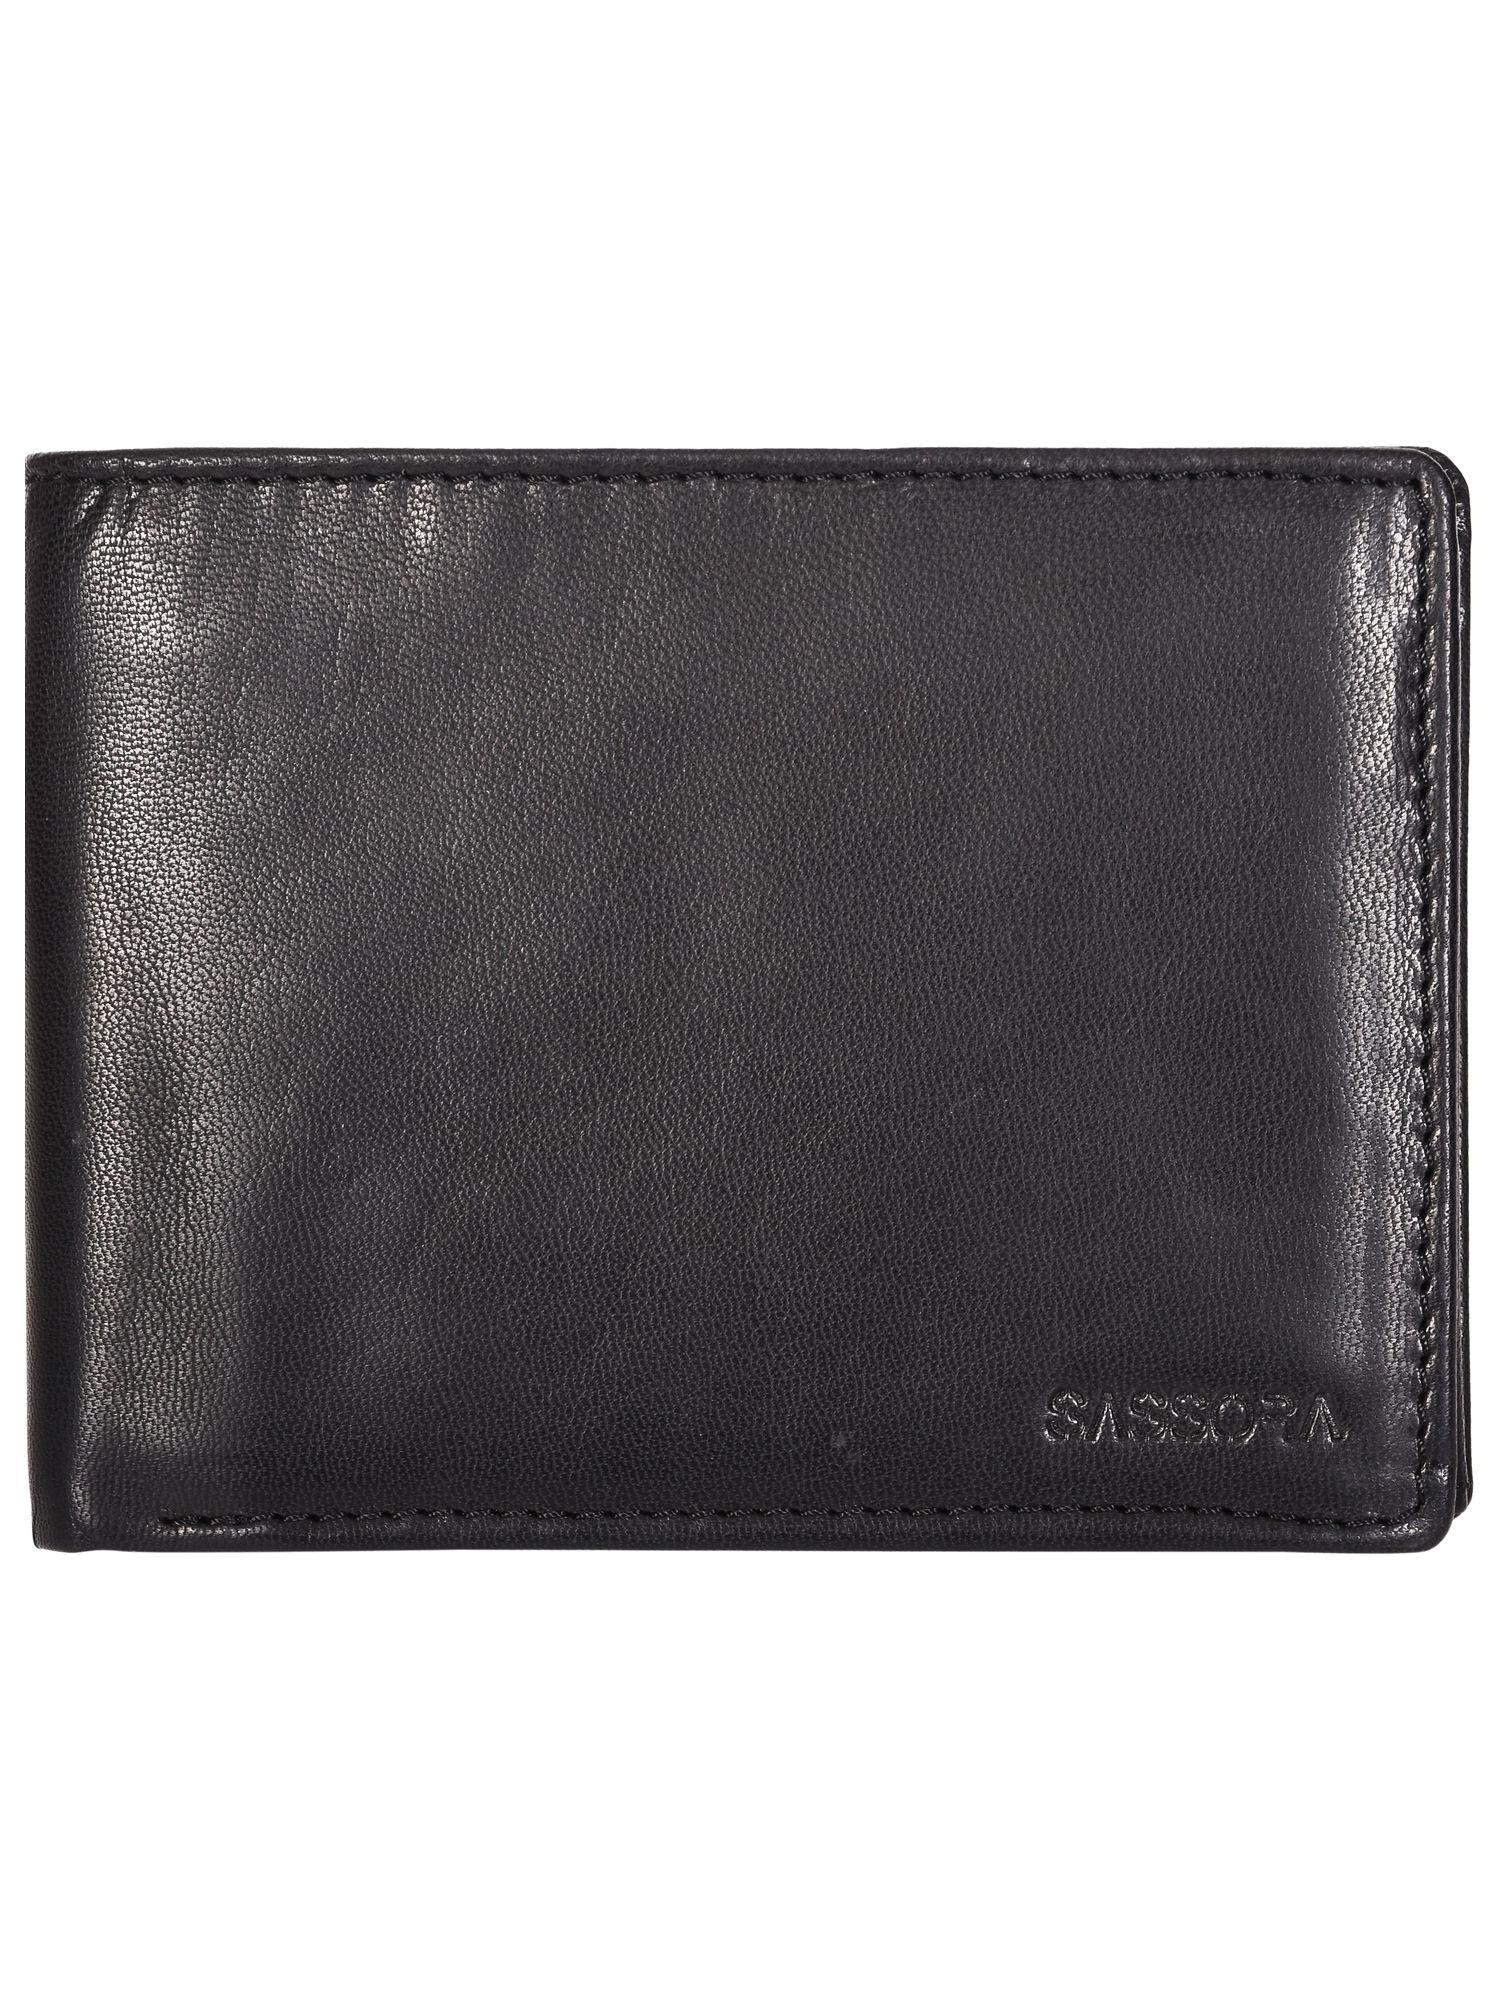 genuine leather medium size black rfid protected men bifold wallet (l)